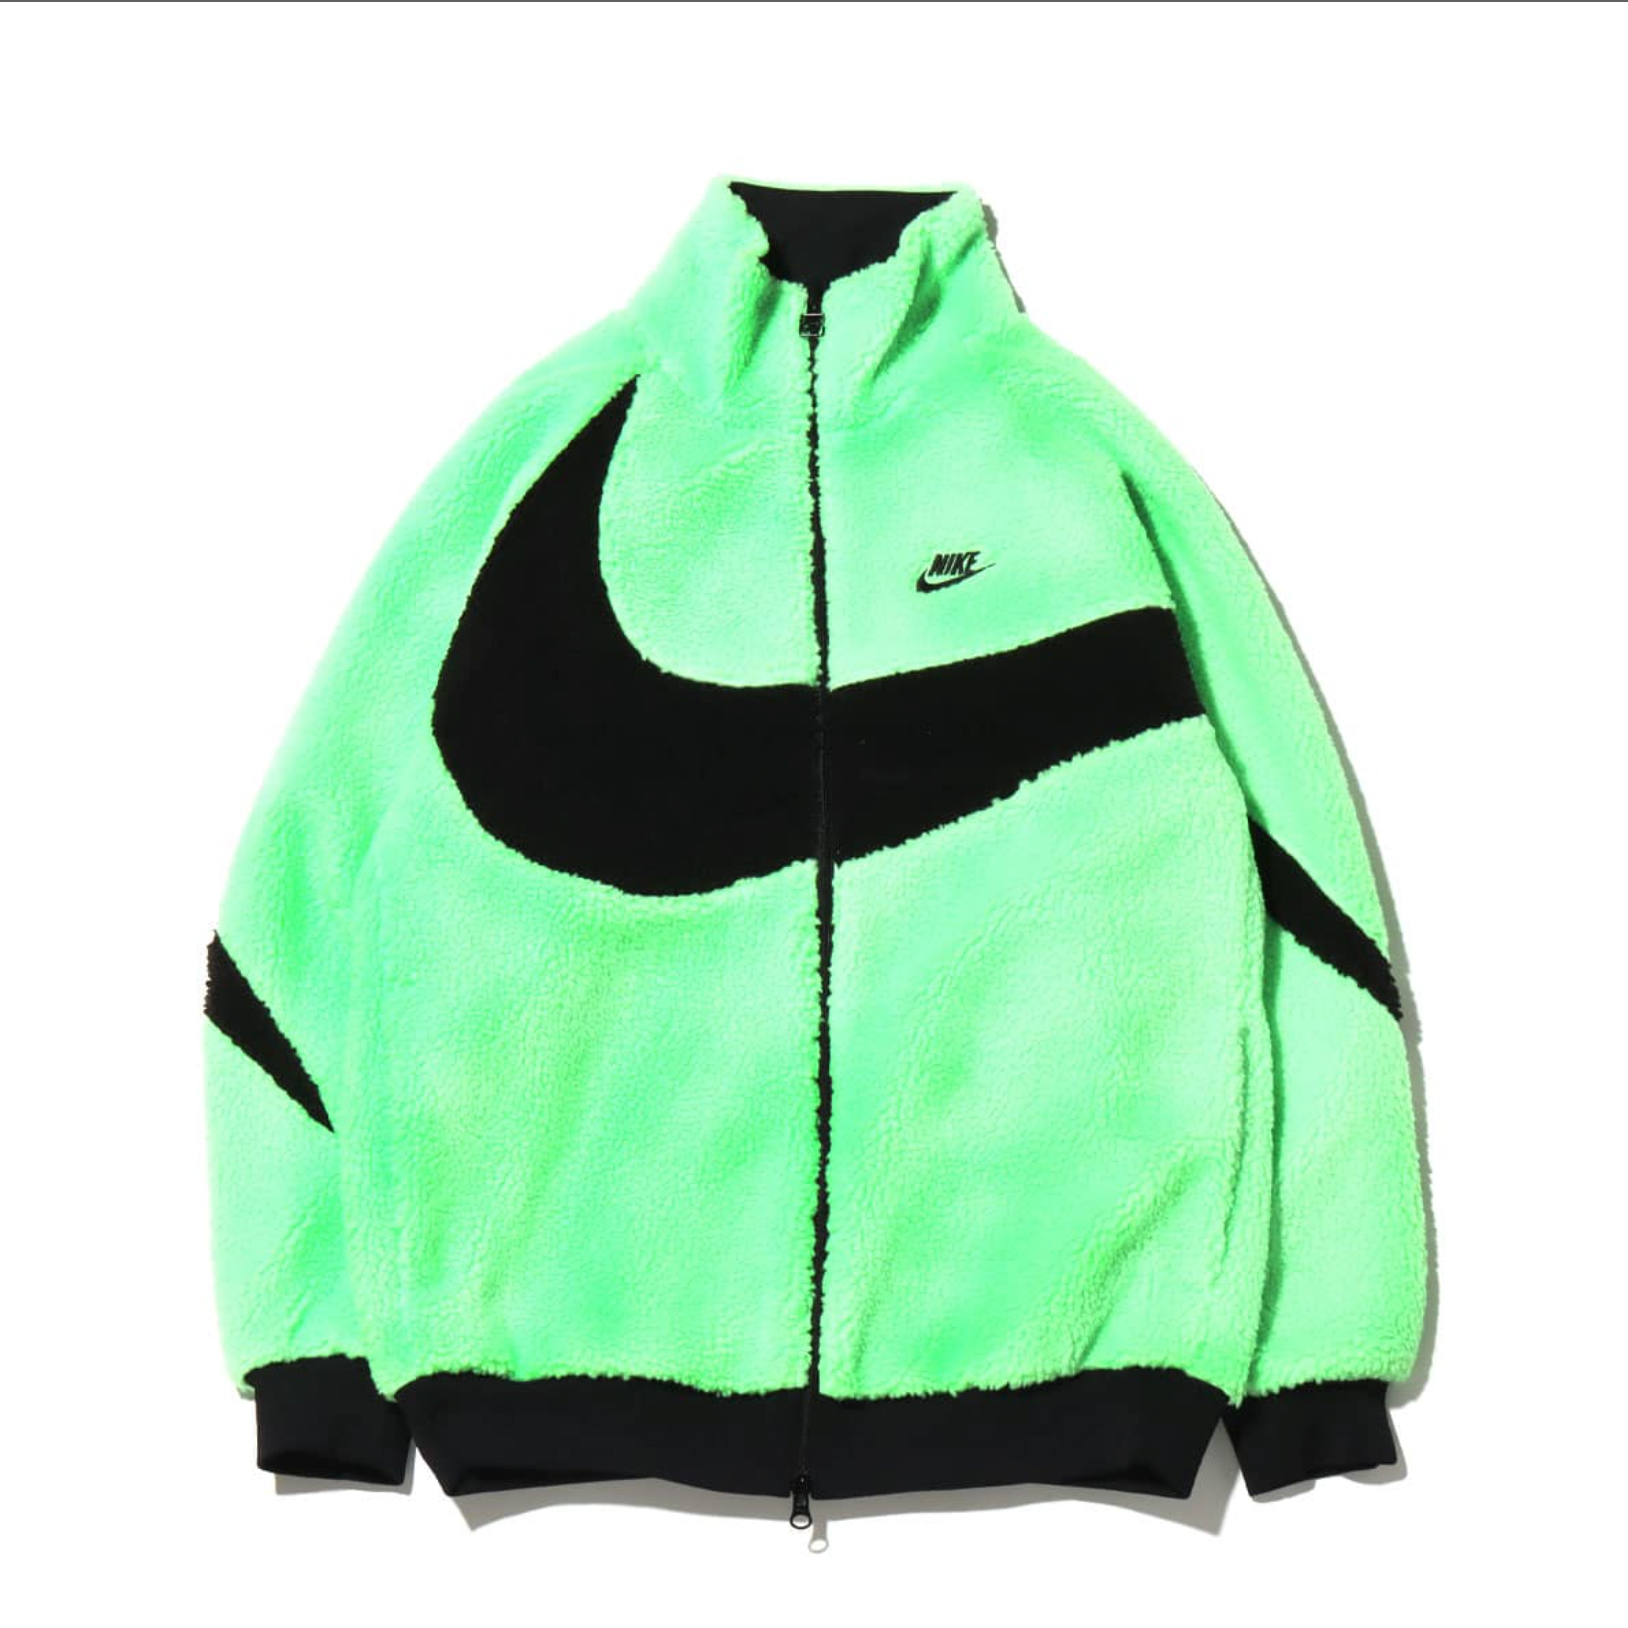 Nike Women's Big Swoosh Reversible Boa Jacket (Asia Sizing) Neon Green